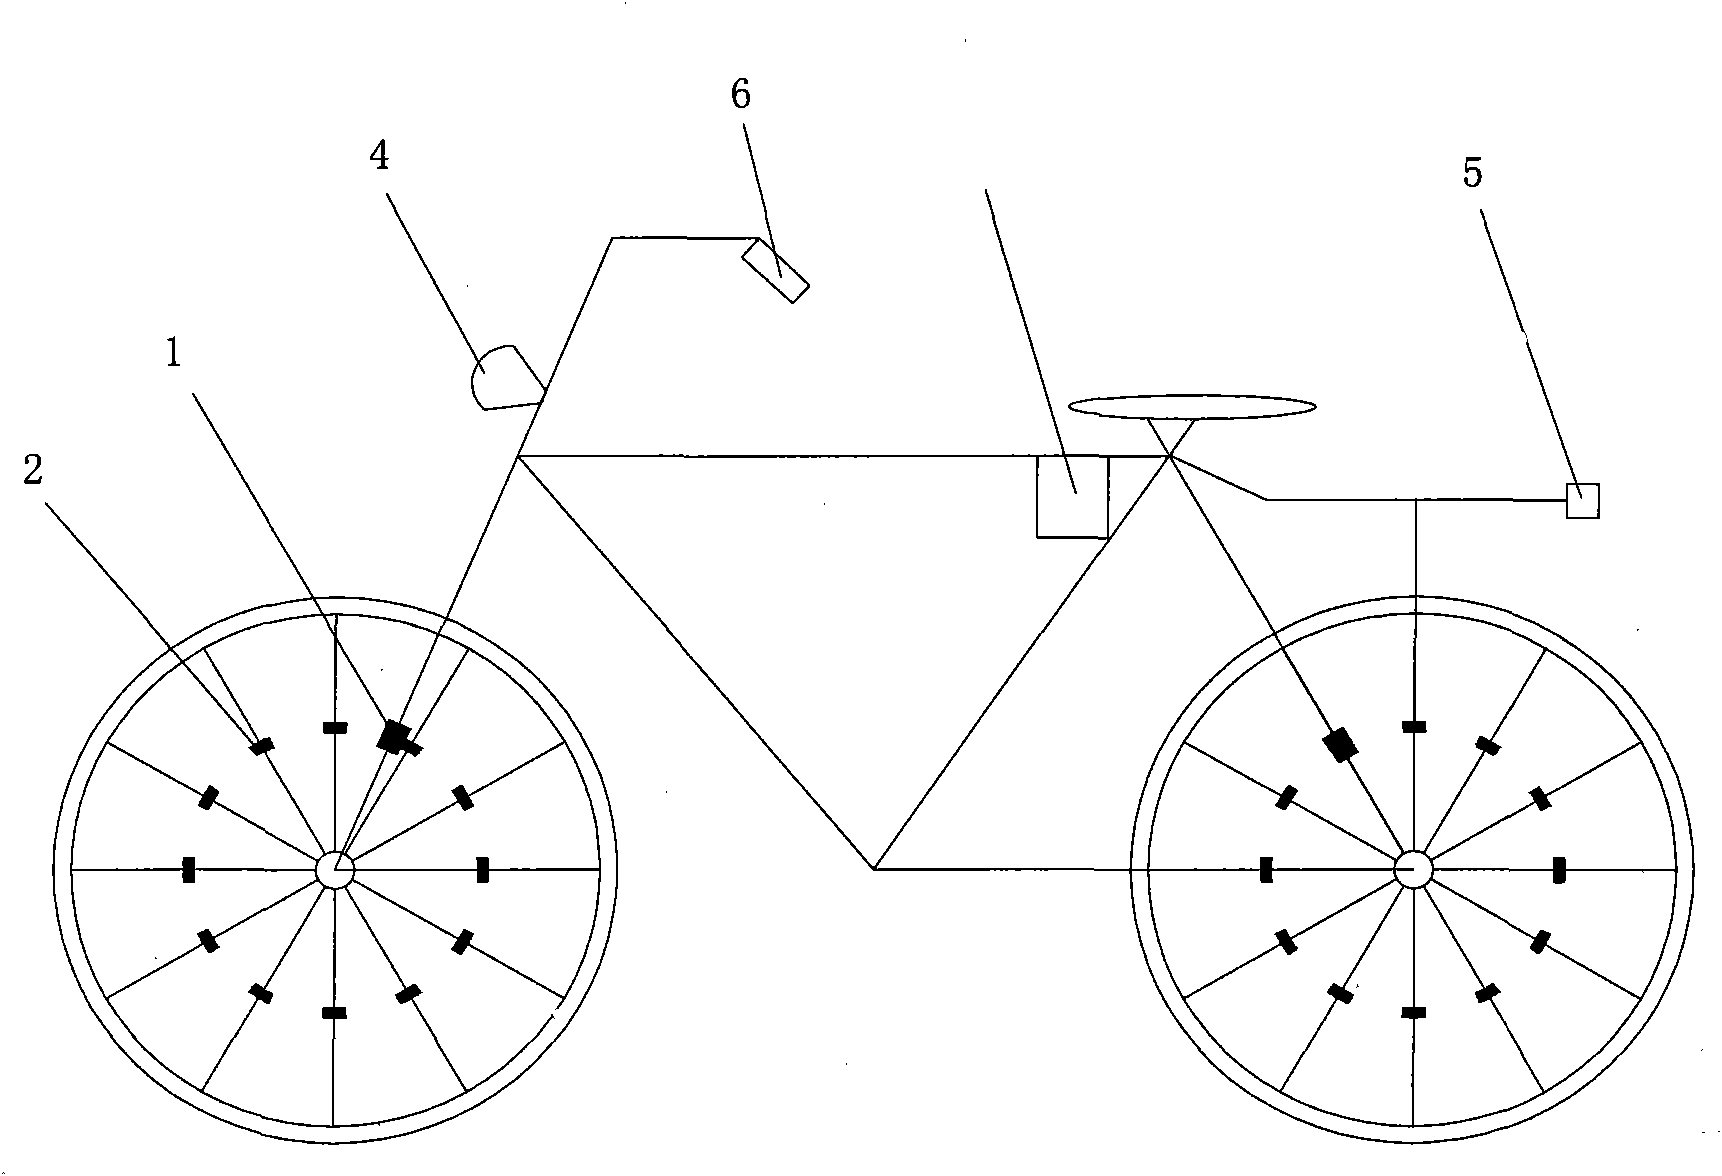 Bicycle illumination and indication device with zero energy consumption